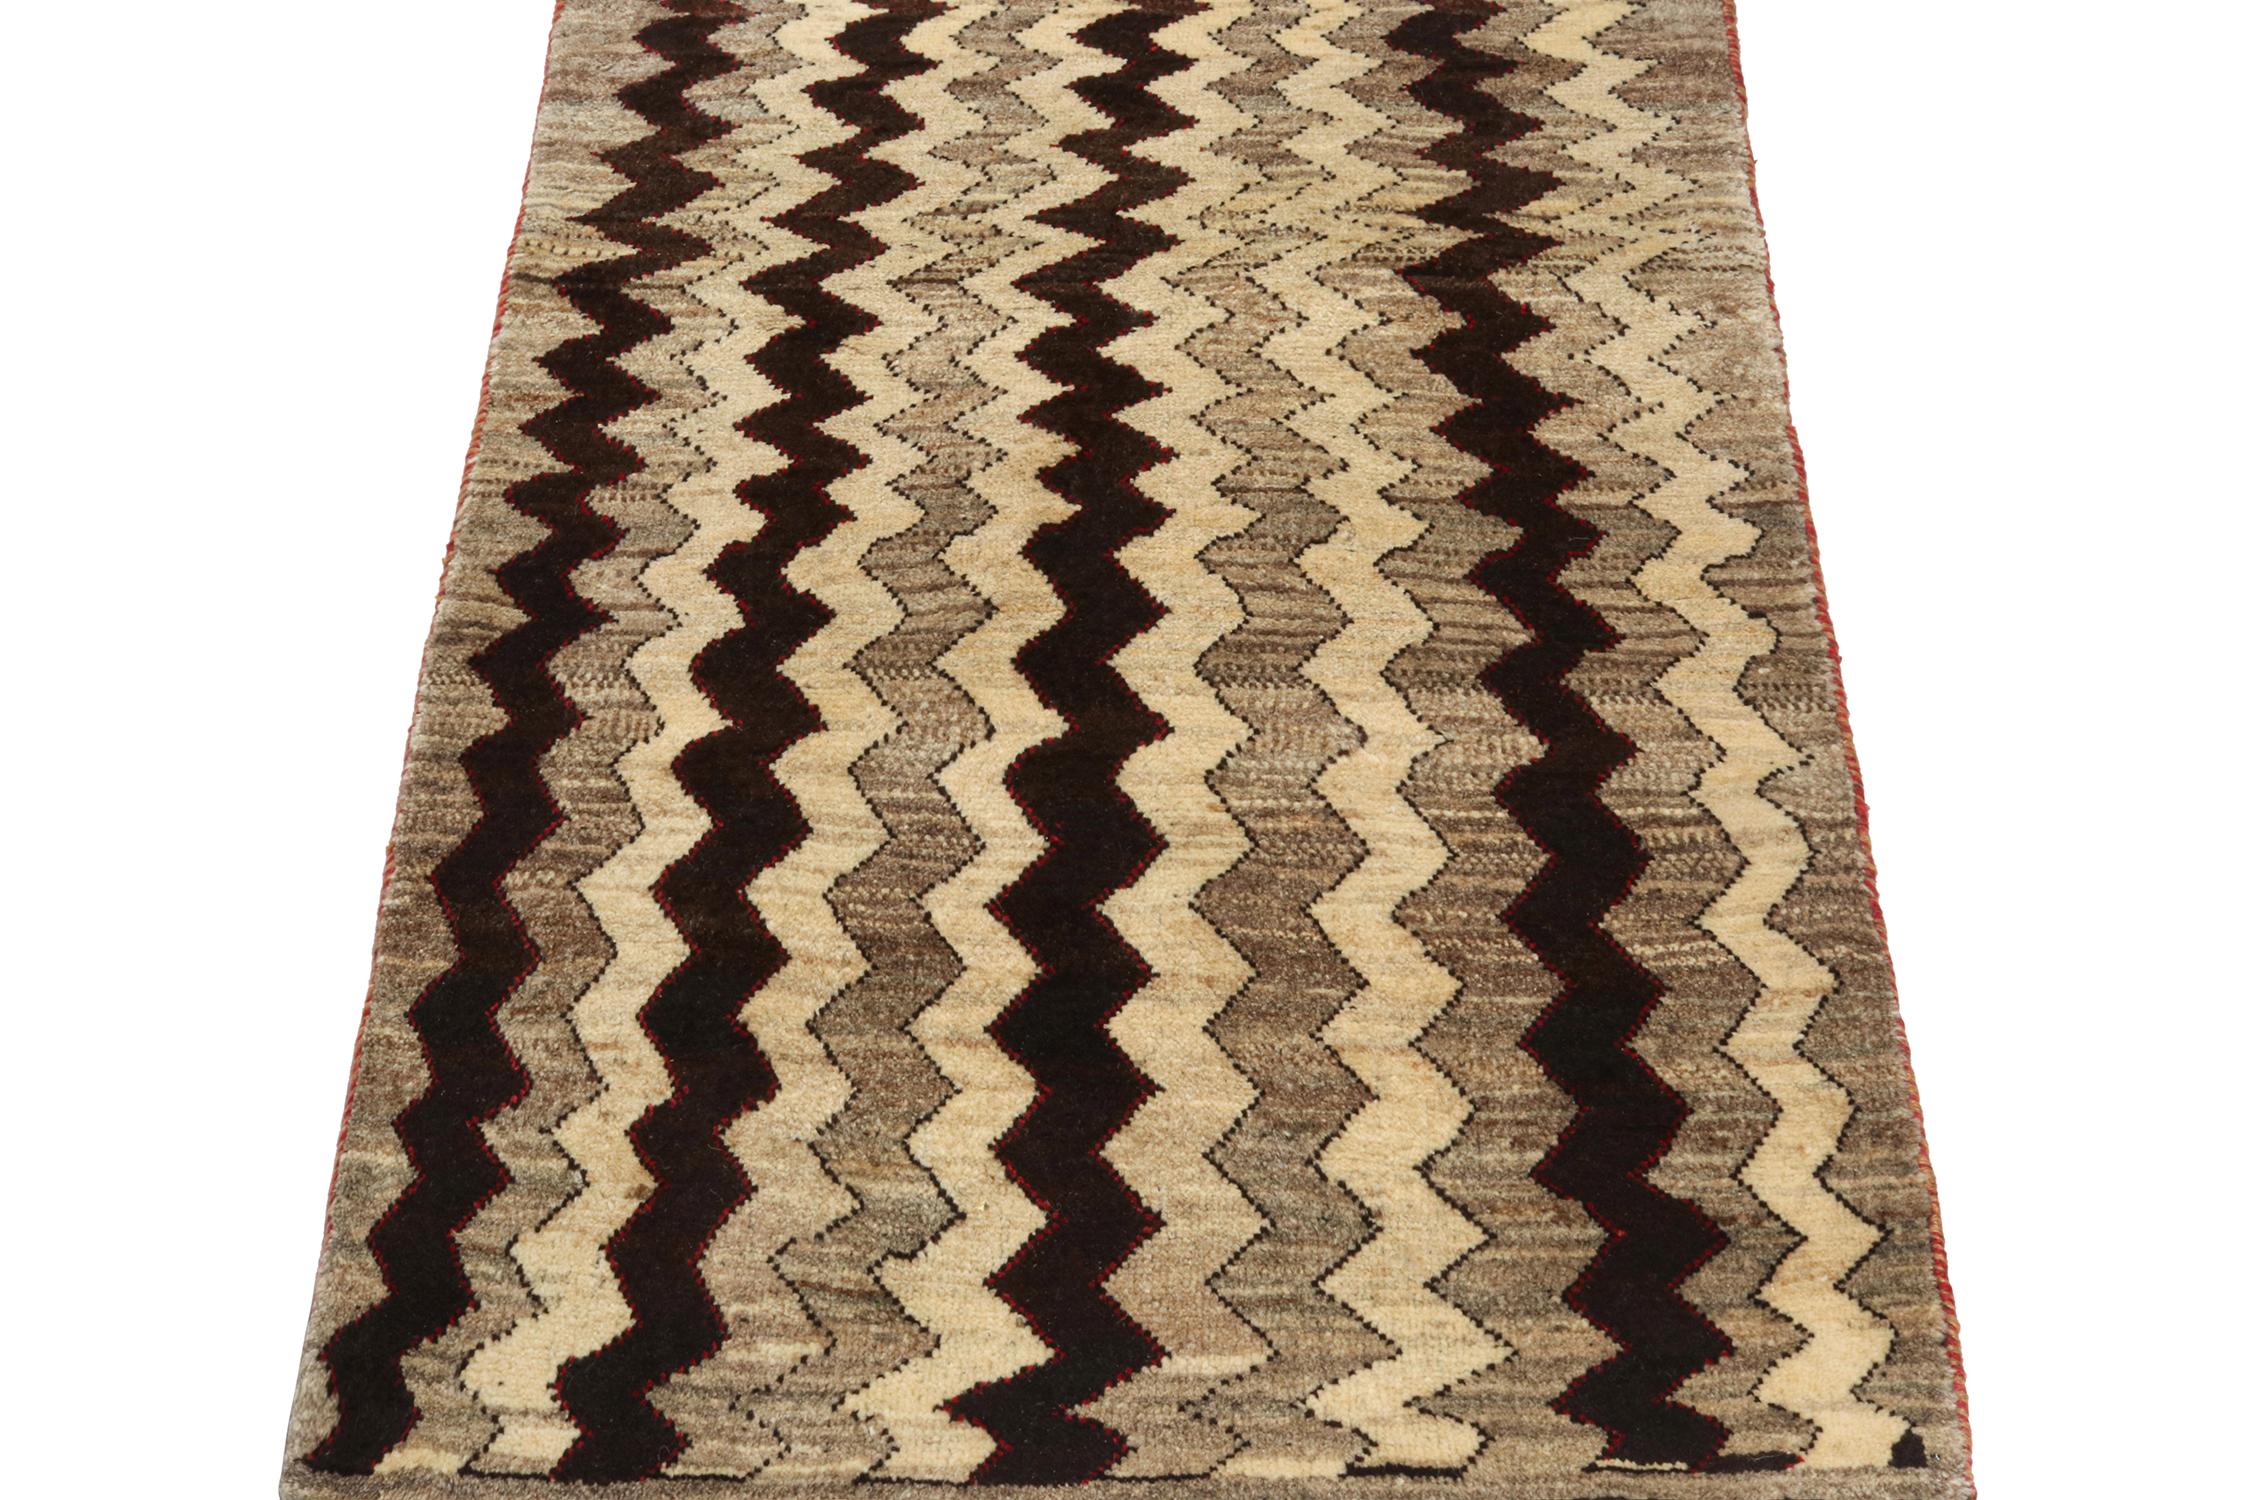 Turkish Vintage Gabbeh Tribal Rug in Beige-Brown & Black Chevron Patterns by Rug & Kilim For Sale